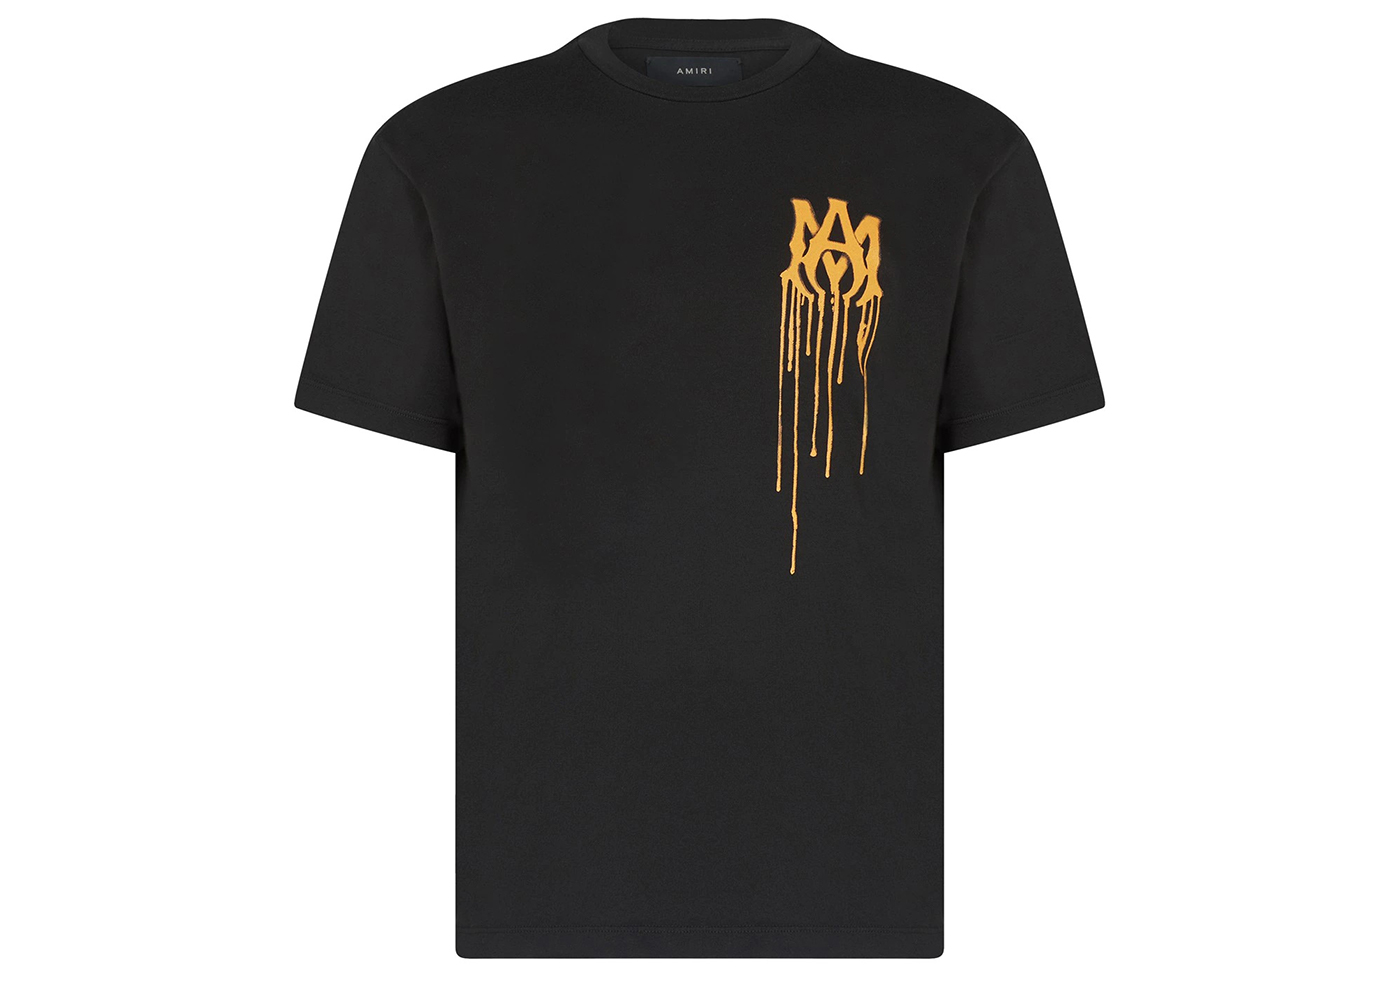 AMIRI Paint Drip AM Logo T-Shirt Black/Orange Men's - US